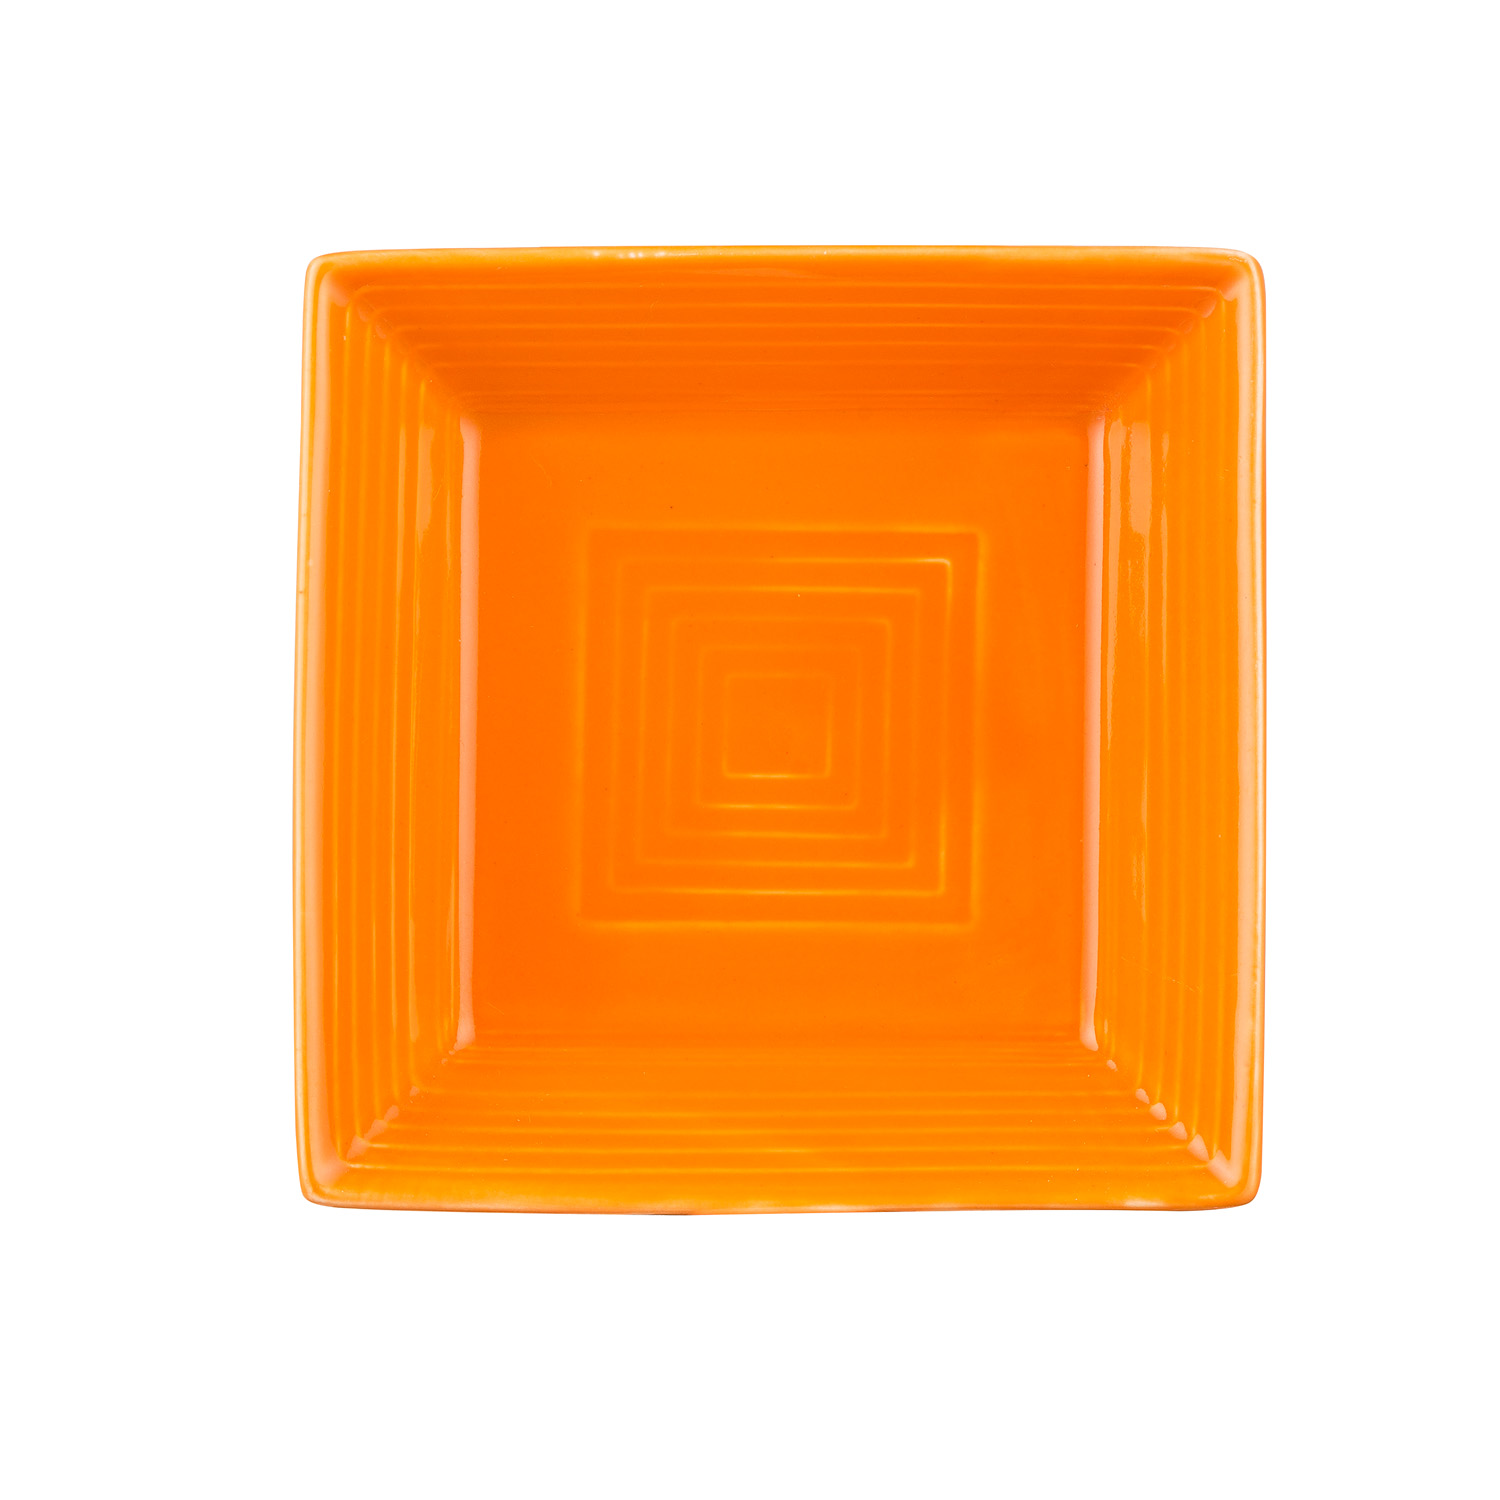 CAC China TG-SQ8-TNG Tango Embossed Porcelain Tangerine Square Plate 8"  - 2 dozen